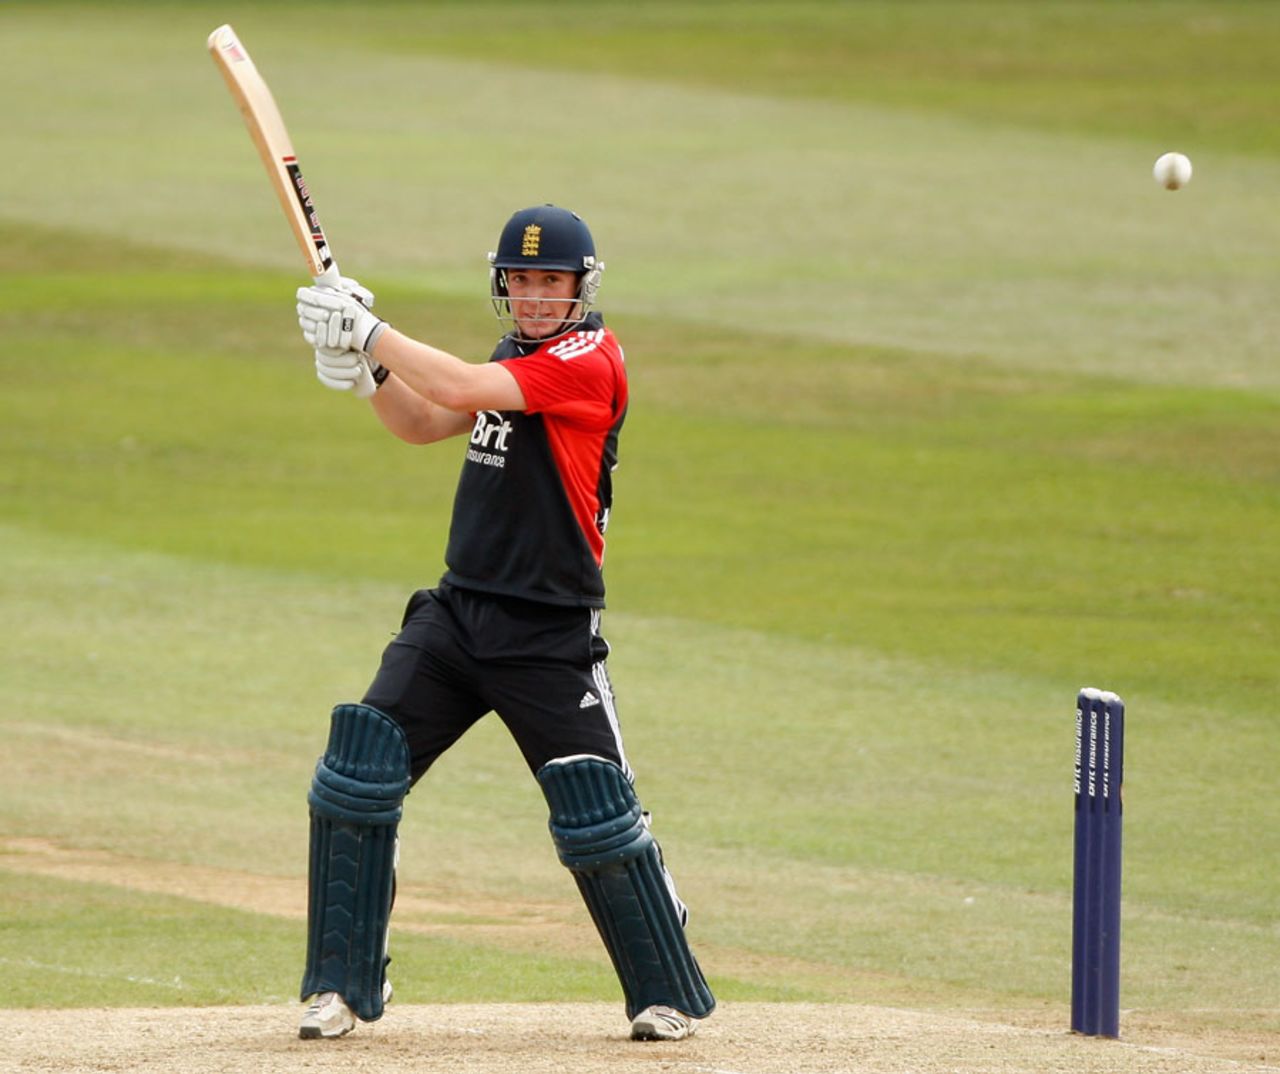 Sam Wood cuts during his 57 off 71 balls, England U-19s v South Africa U-19s, 5th Youth ODI, Taunton, June 26, 2011